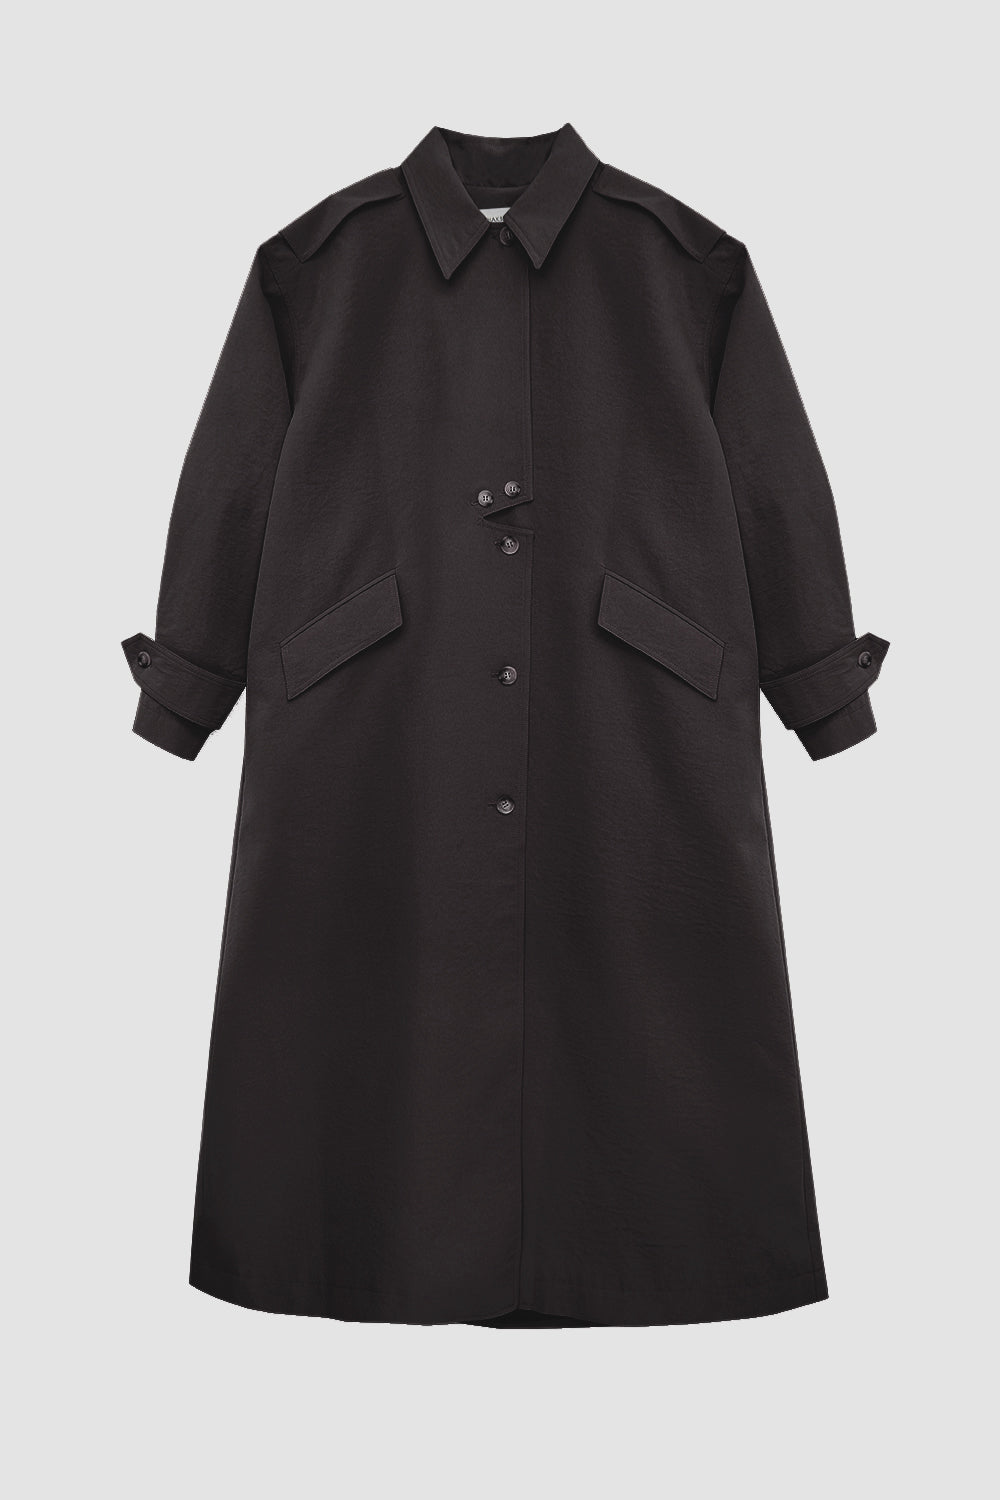 'CEO' Duster Coat in Black